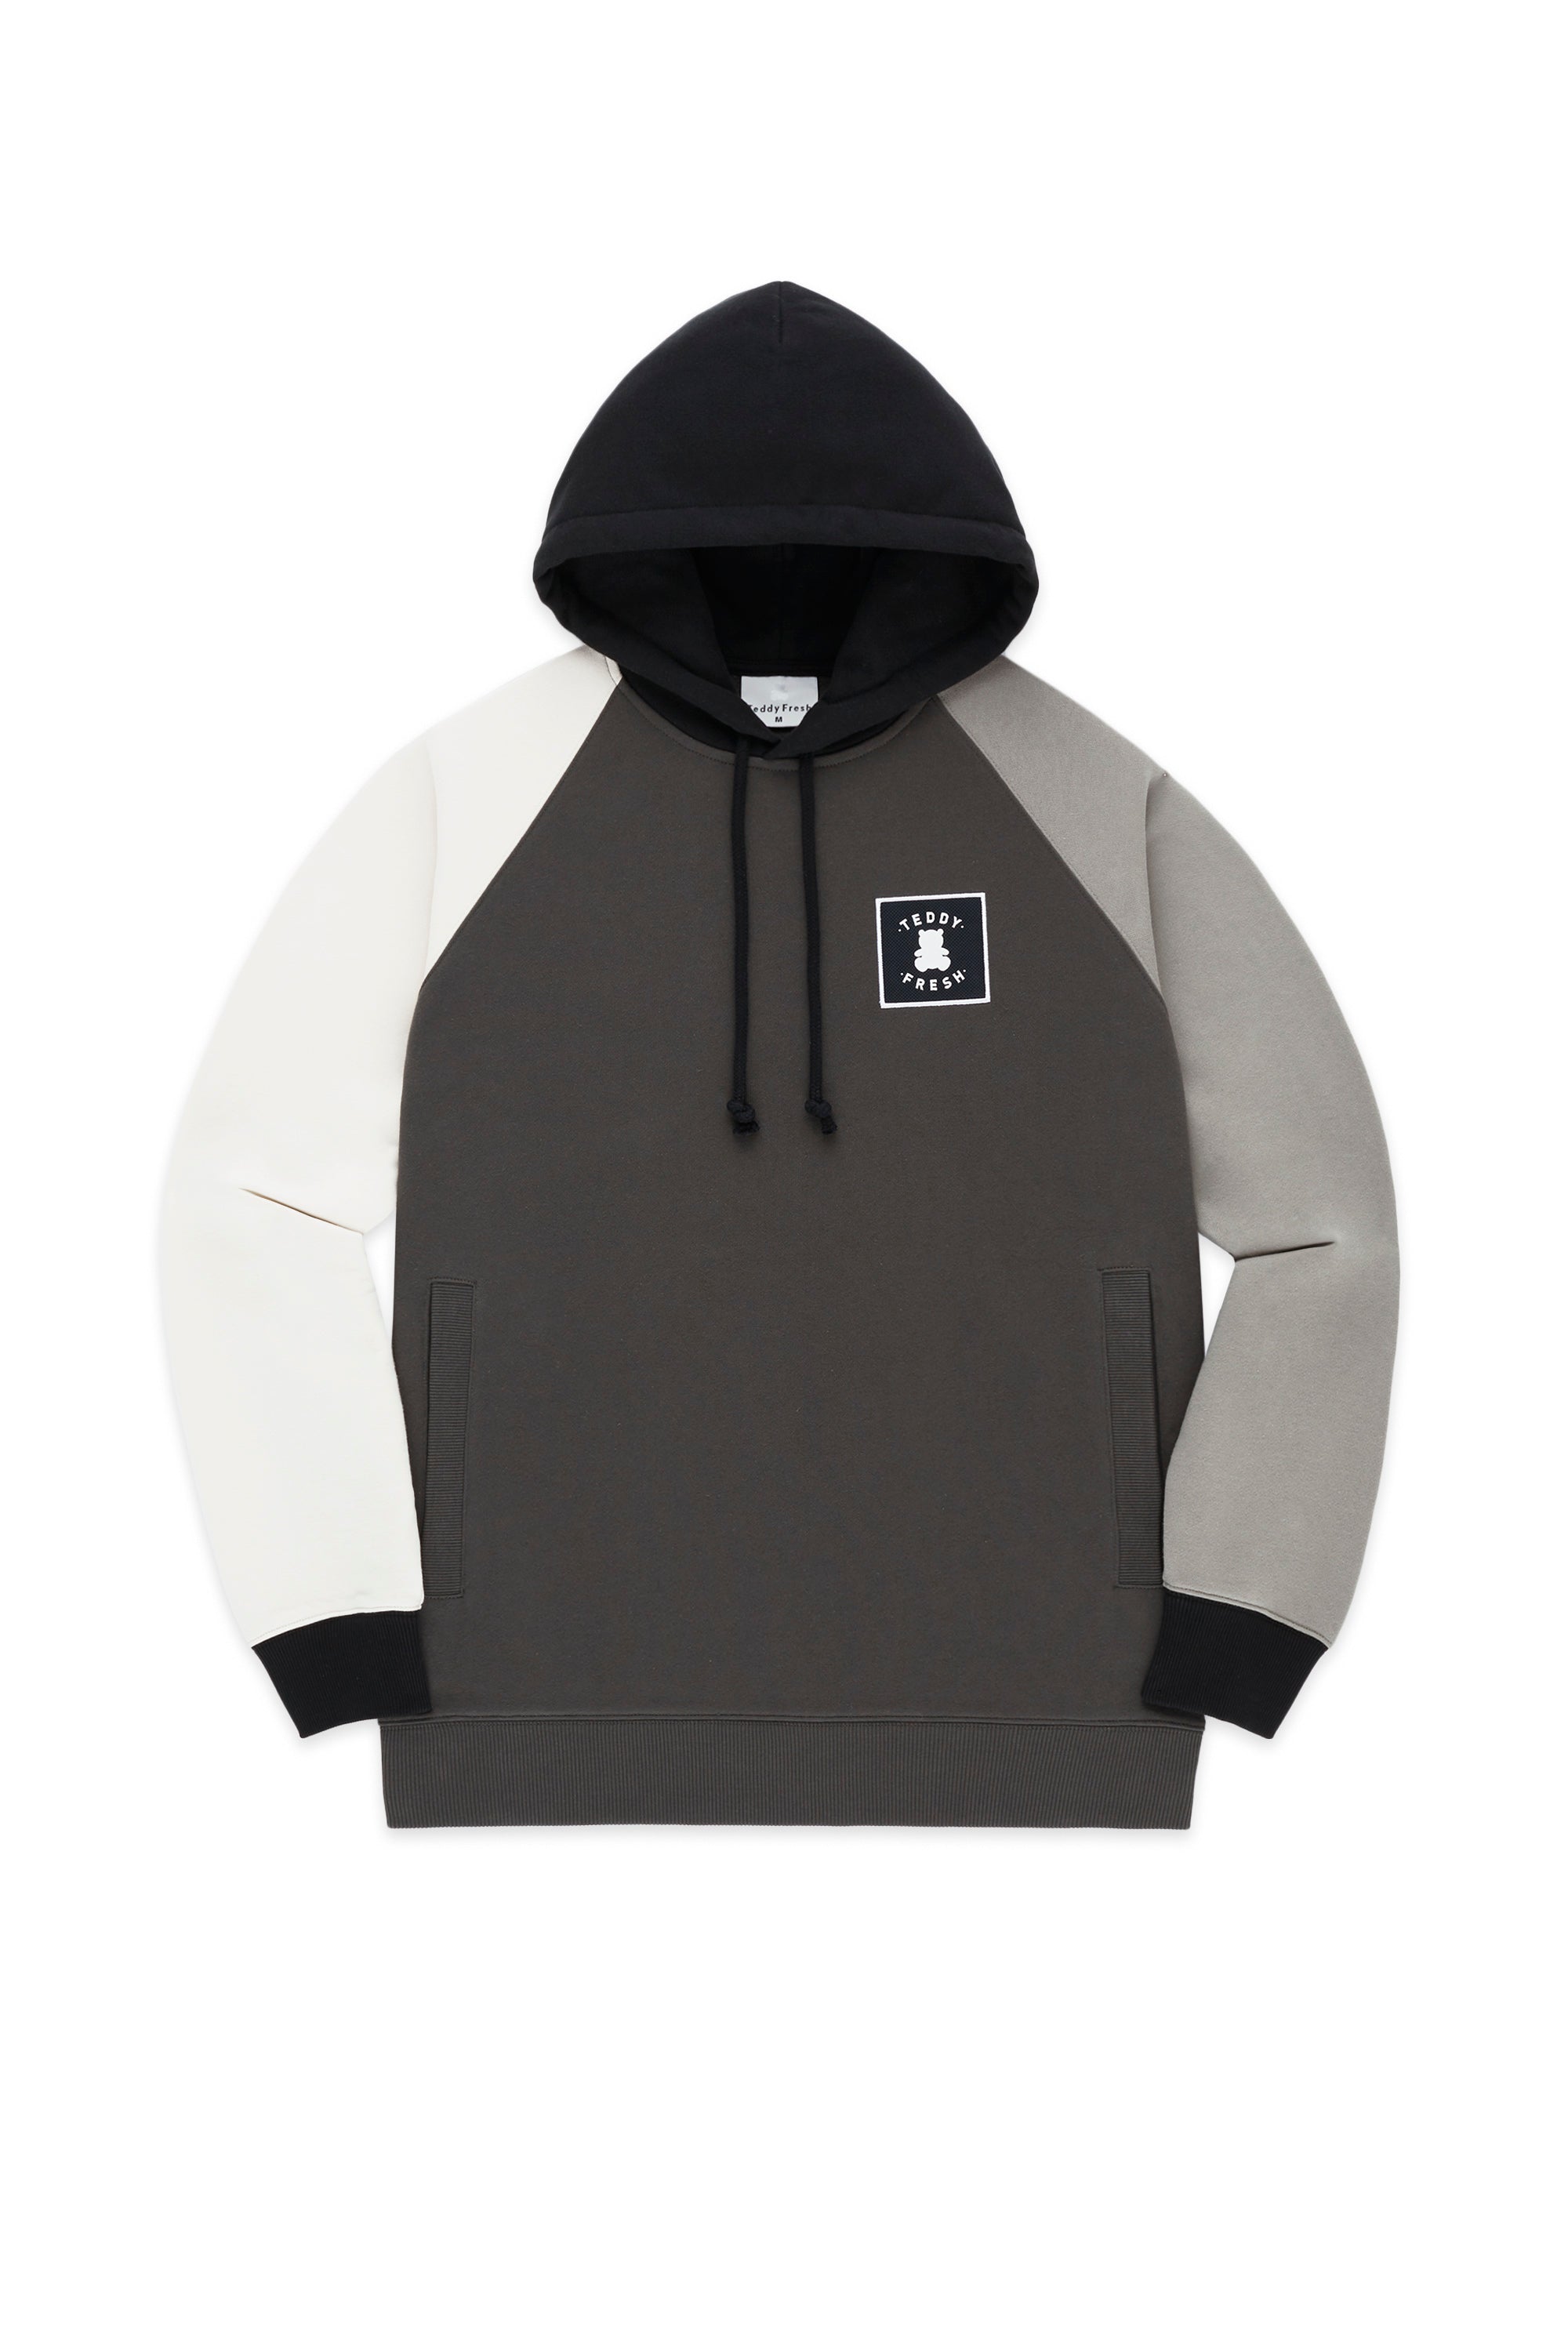 OFF-WHITE Color Block Logo Sweater Dark Grey/White Men's - FW20 - US